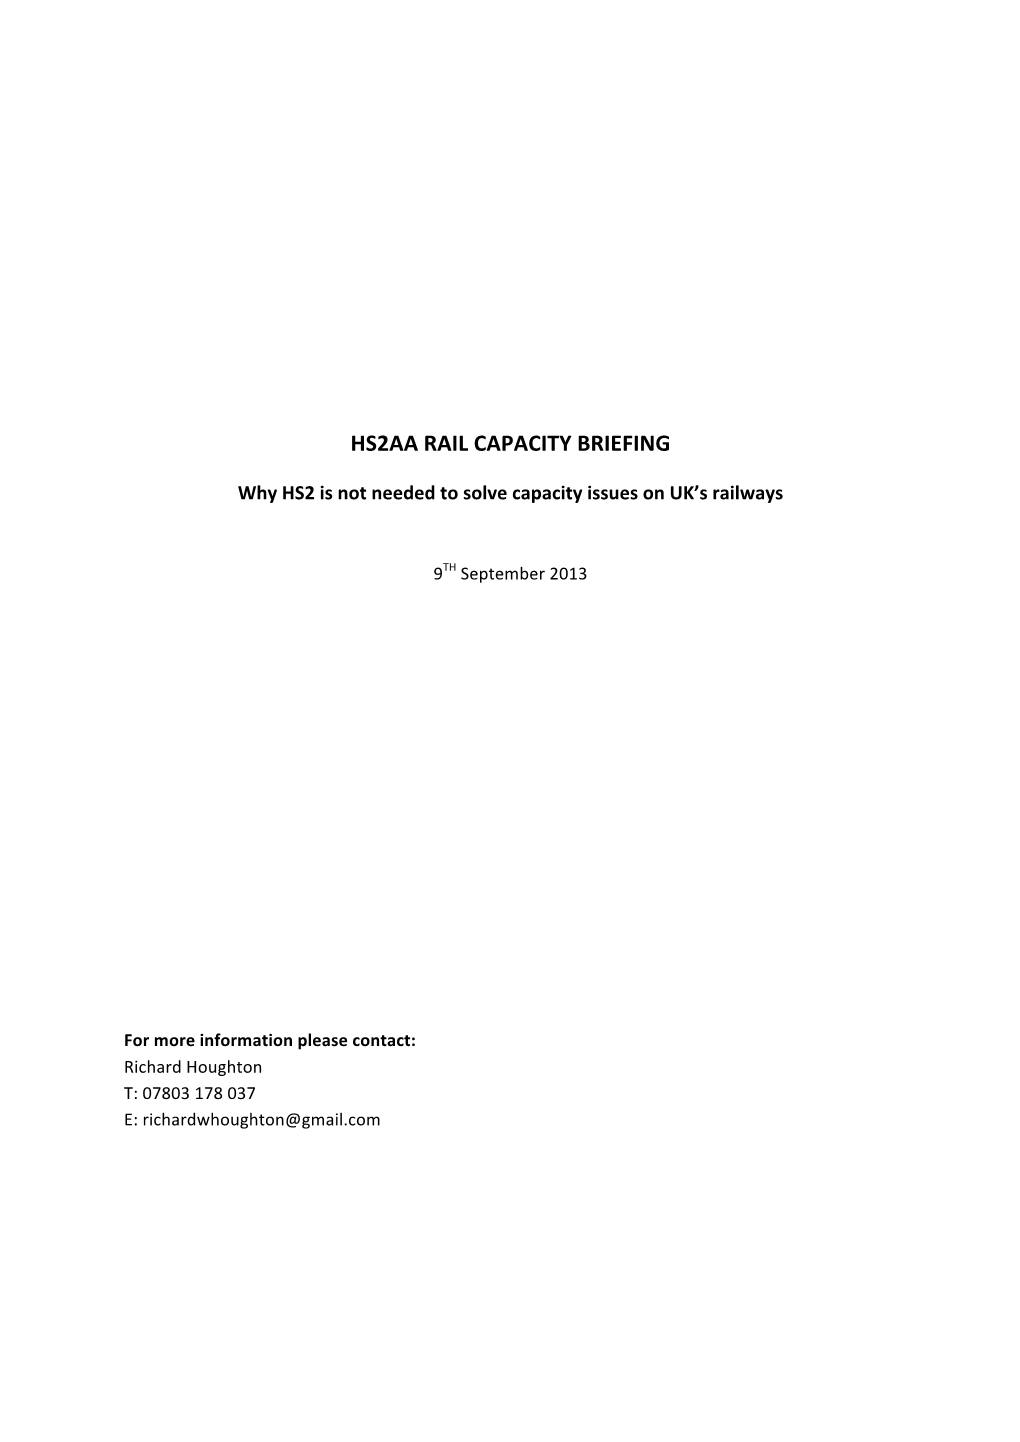 HS2AA Capacity Report